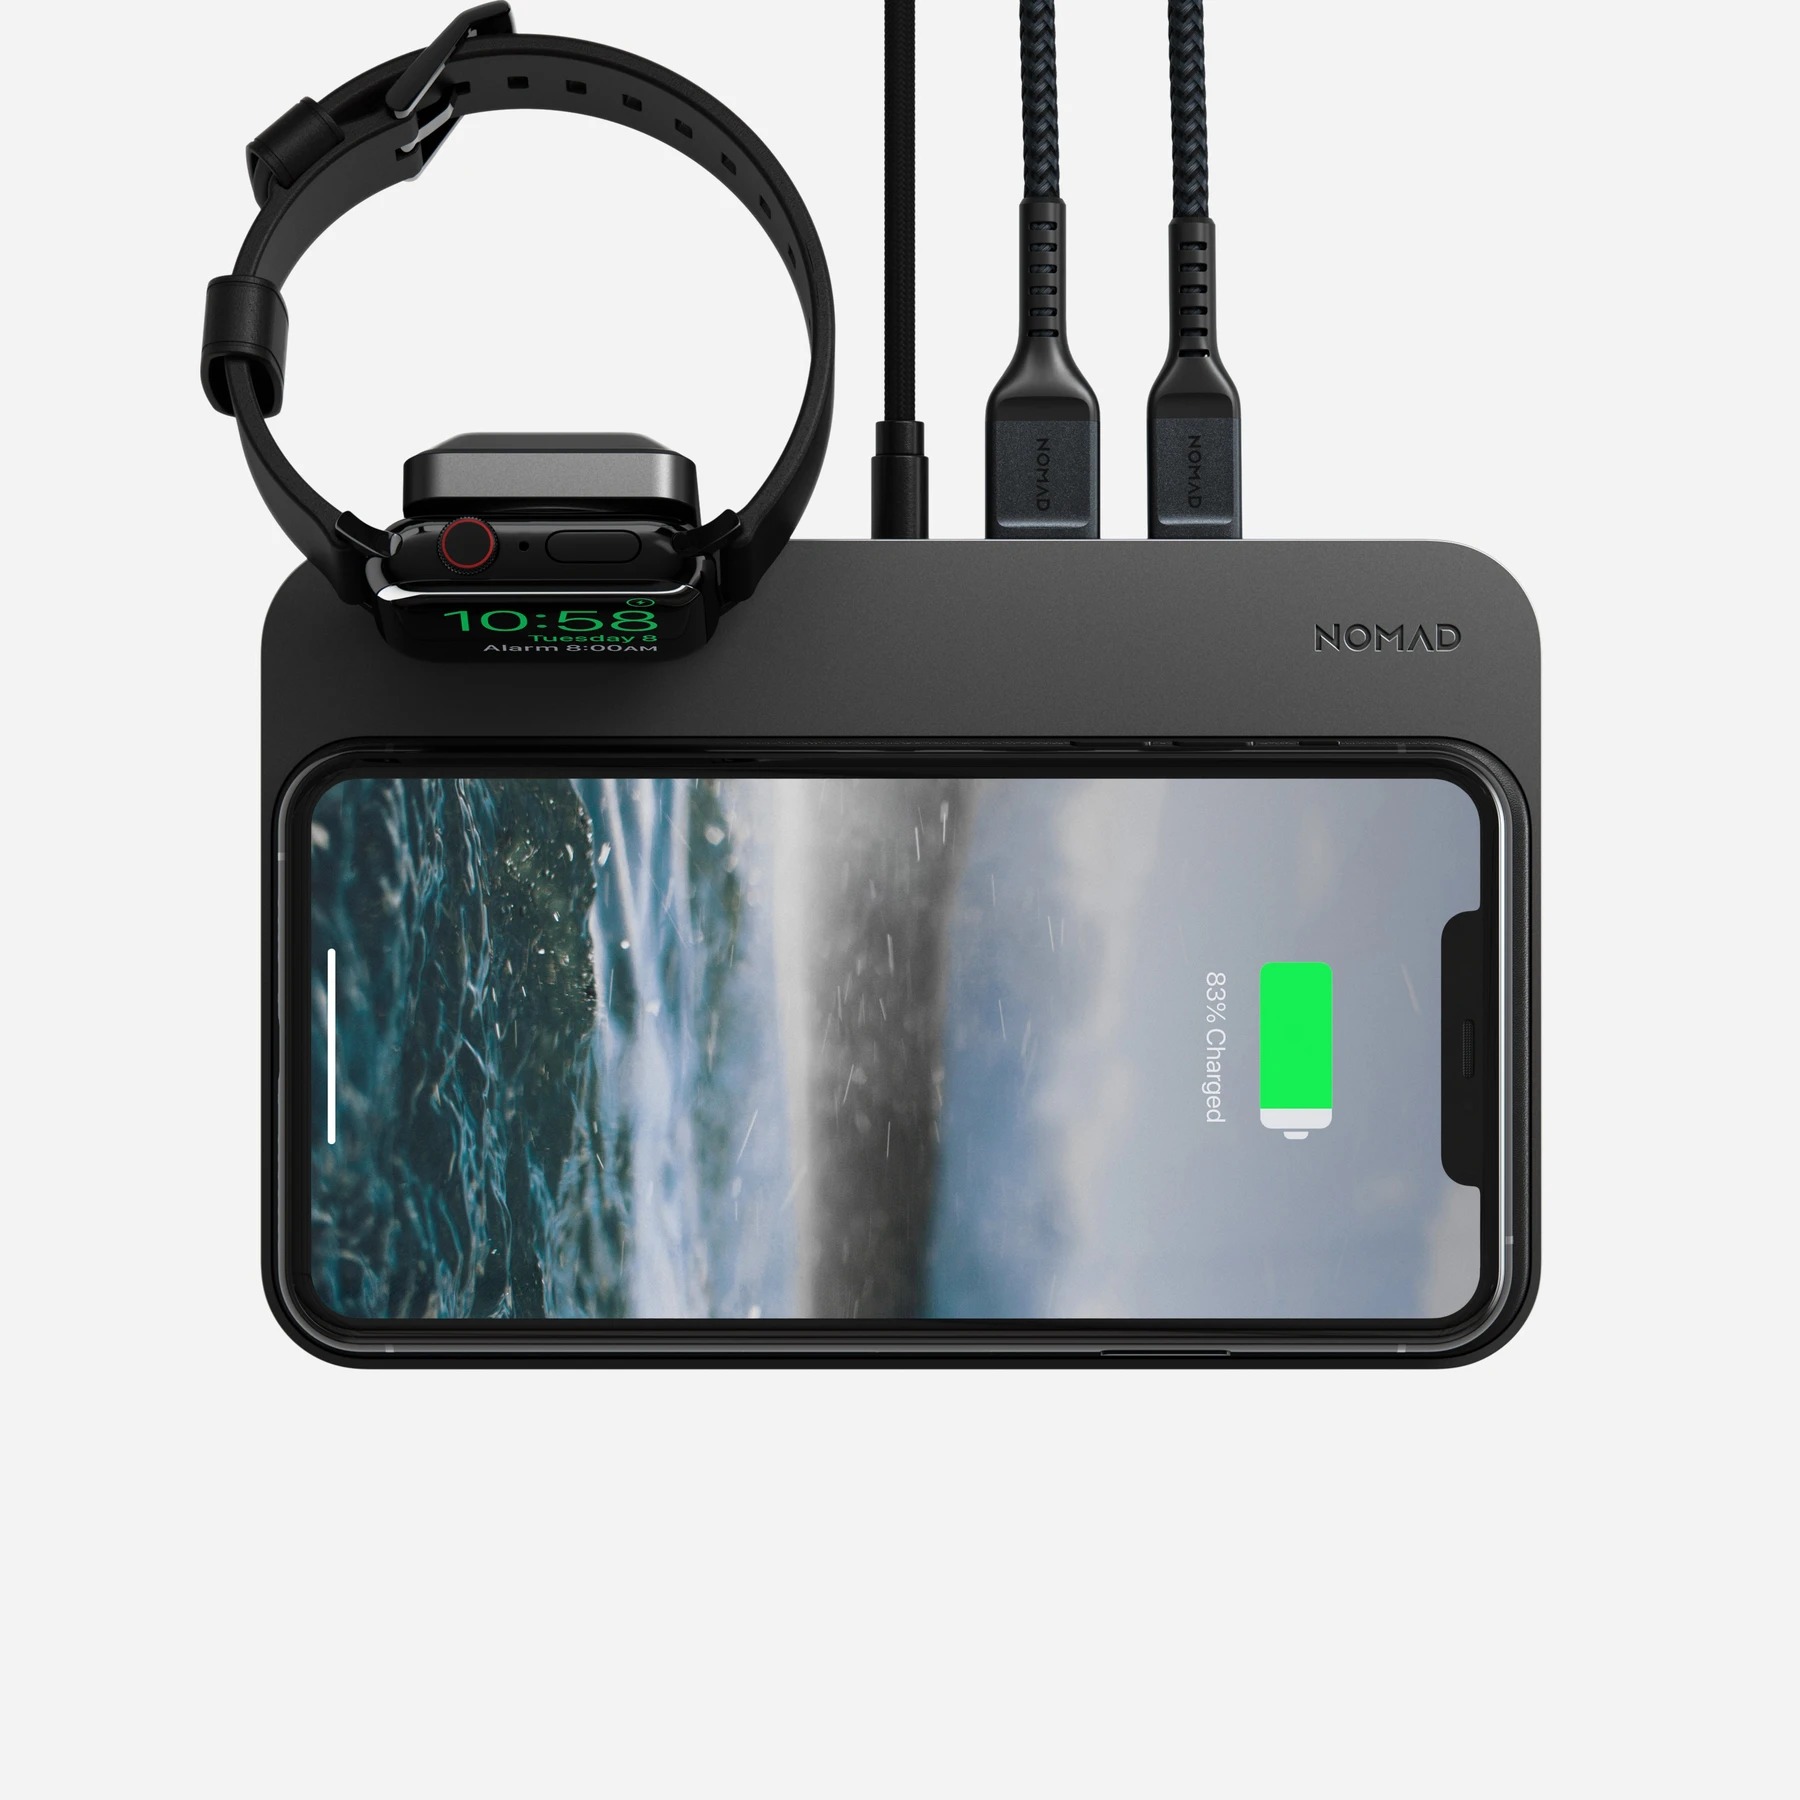 Nomad、人気の充電マット｢Nomad Base Station Apple Watch Edition｣の新モデルを発表 − 最大5台の同時充電が可能に